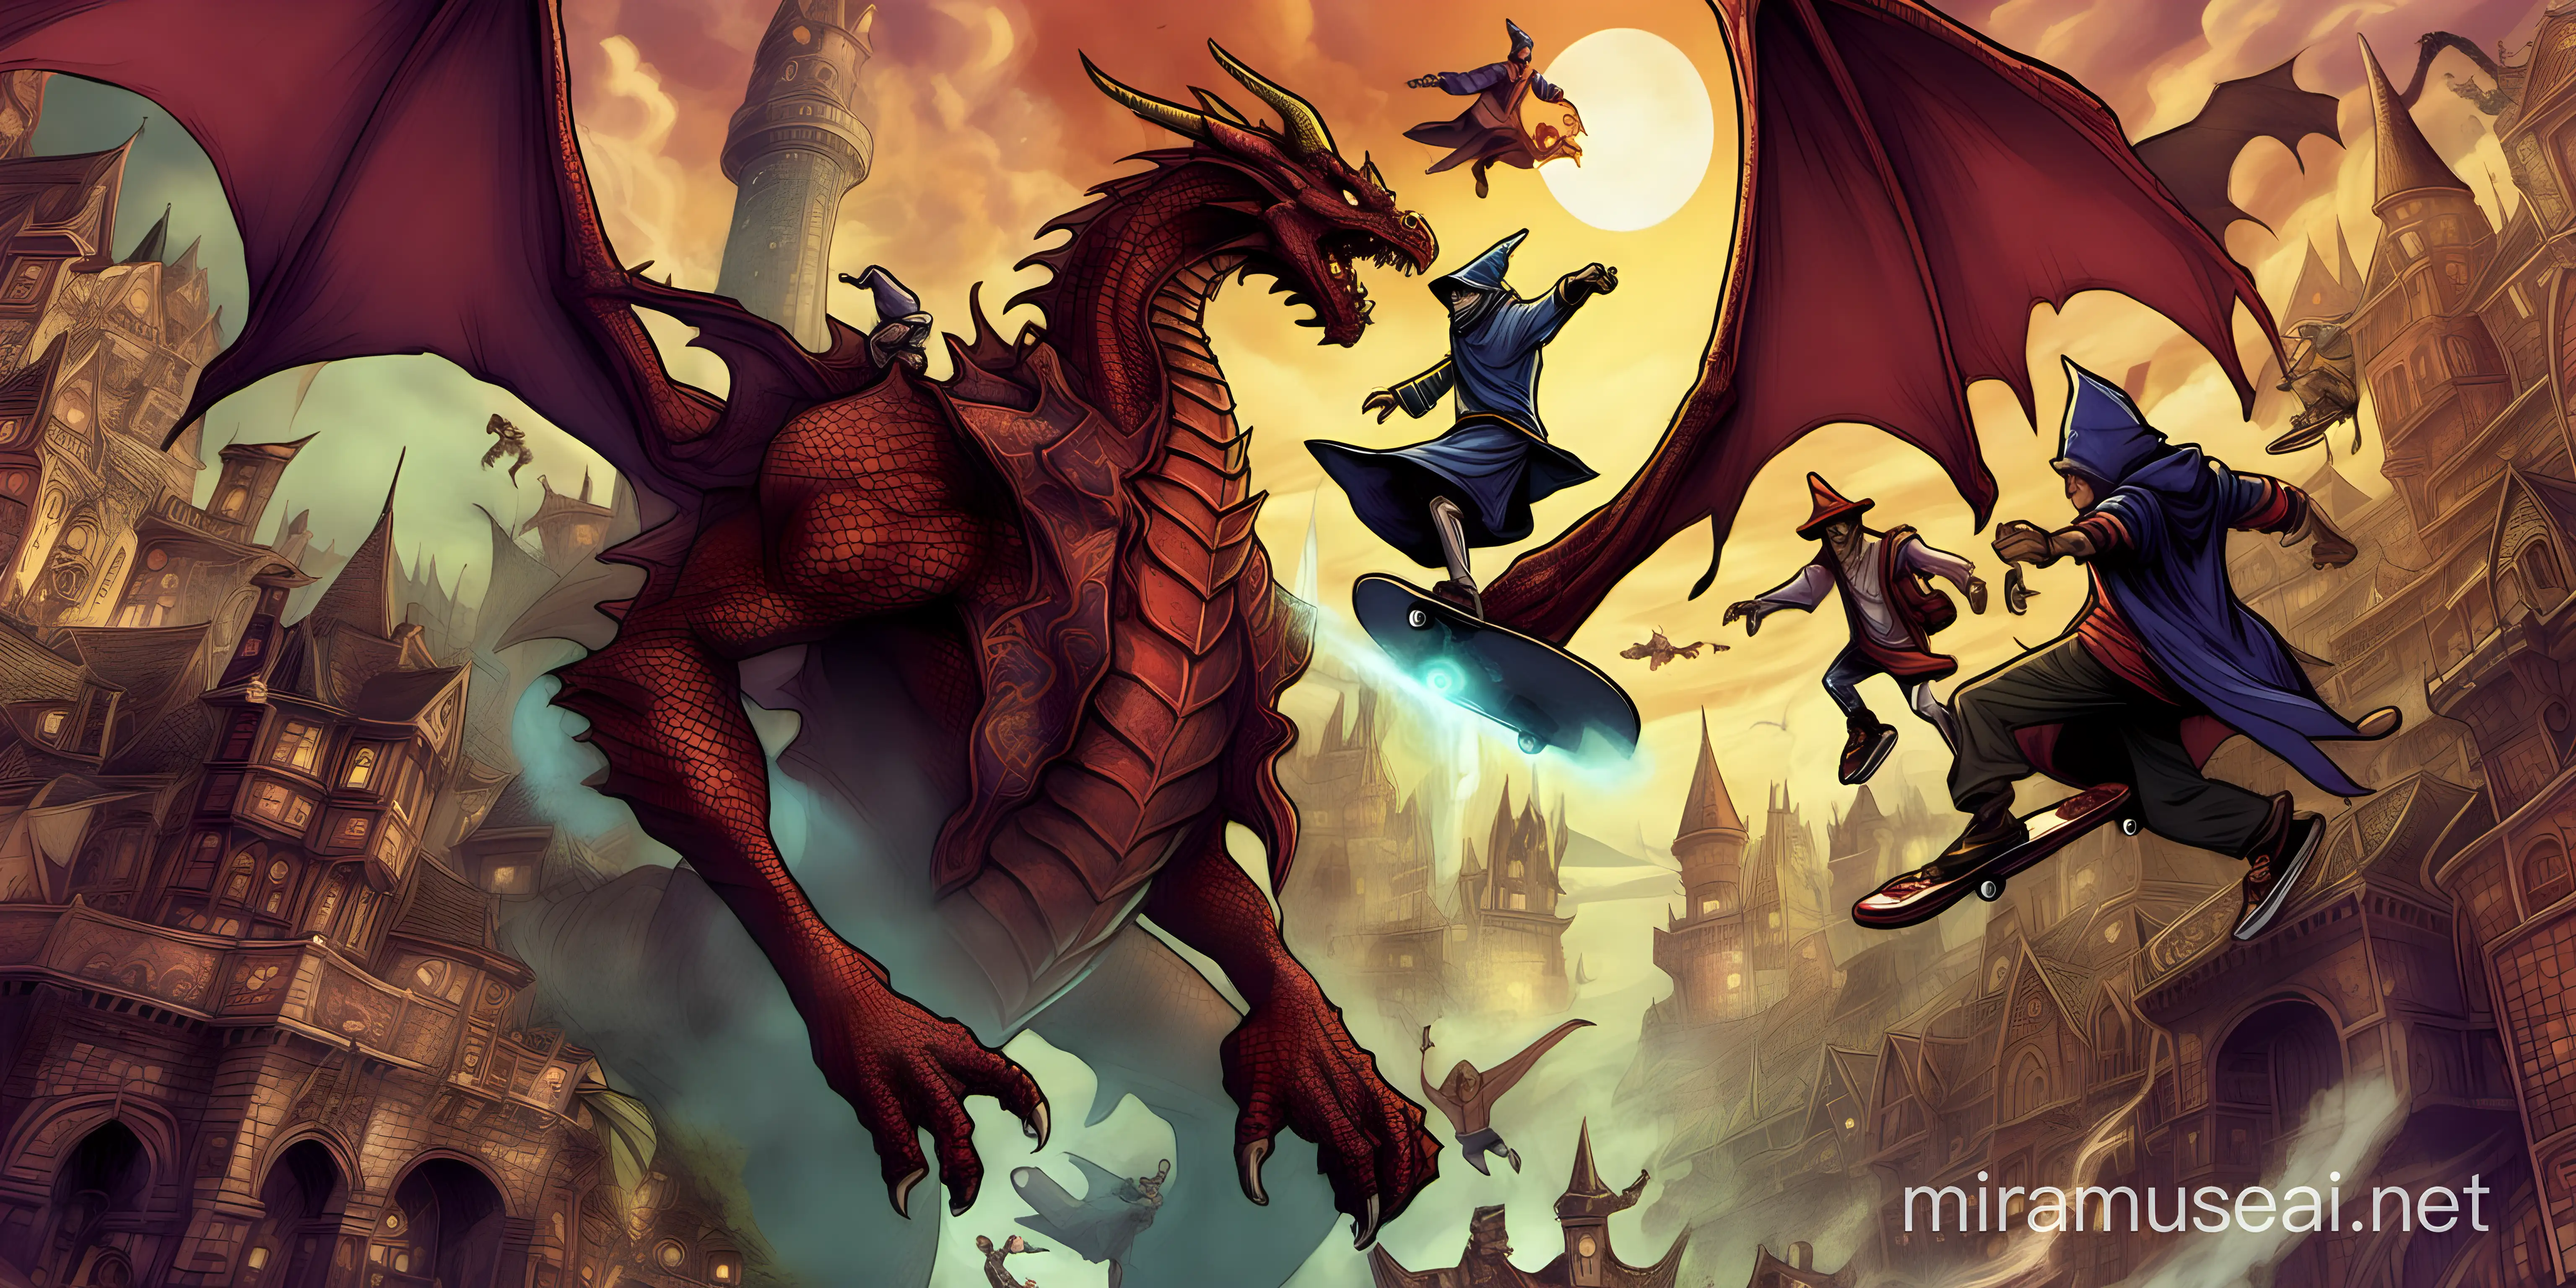 Fantasy Steampunk Wizards Skateboarding to Confront Dragon King